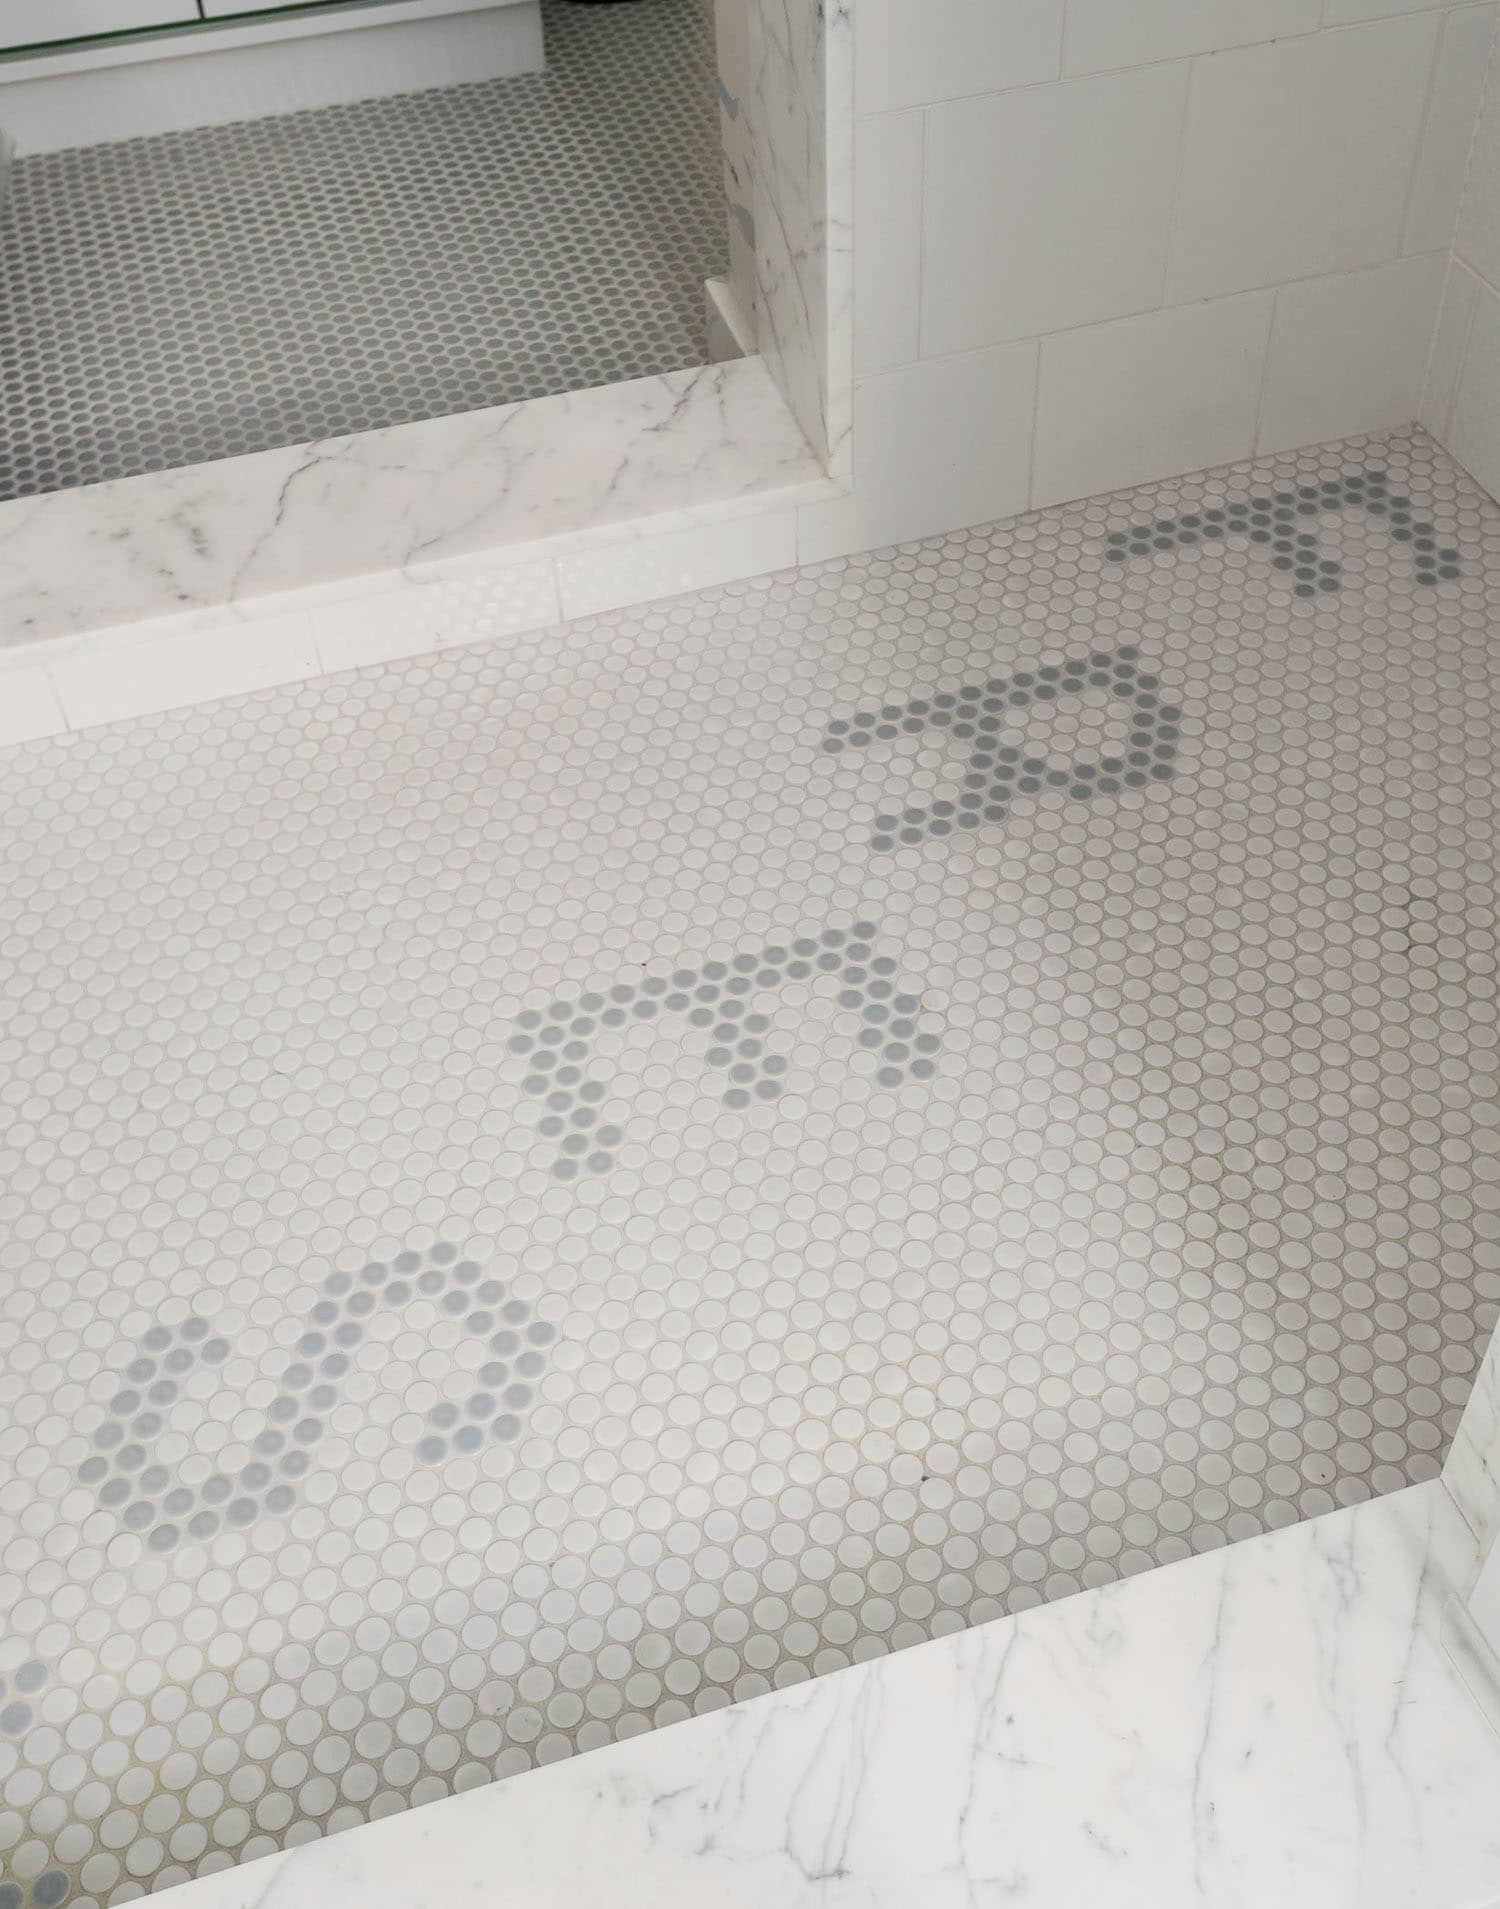 'FRESH' tile floor in the shower | studio DB park avenue house tour on coco kelley